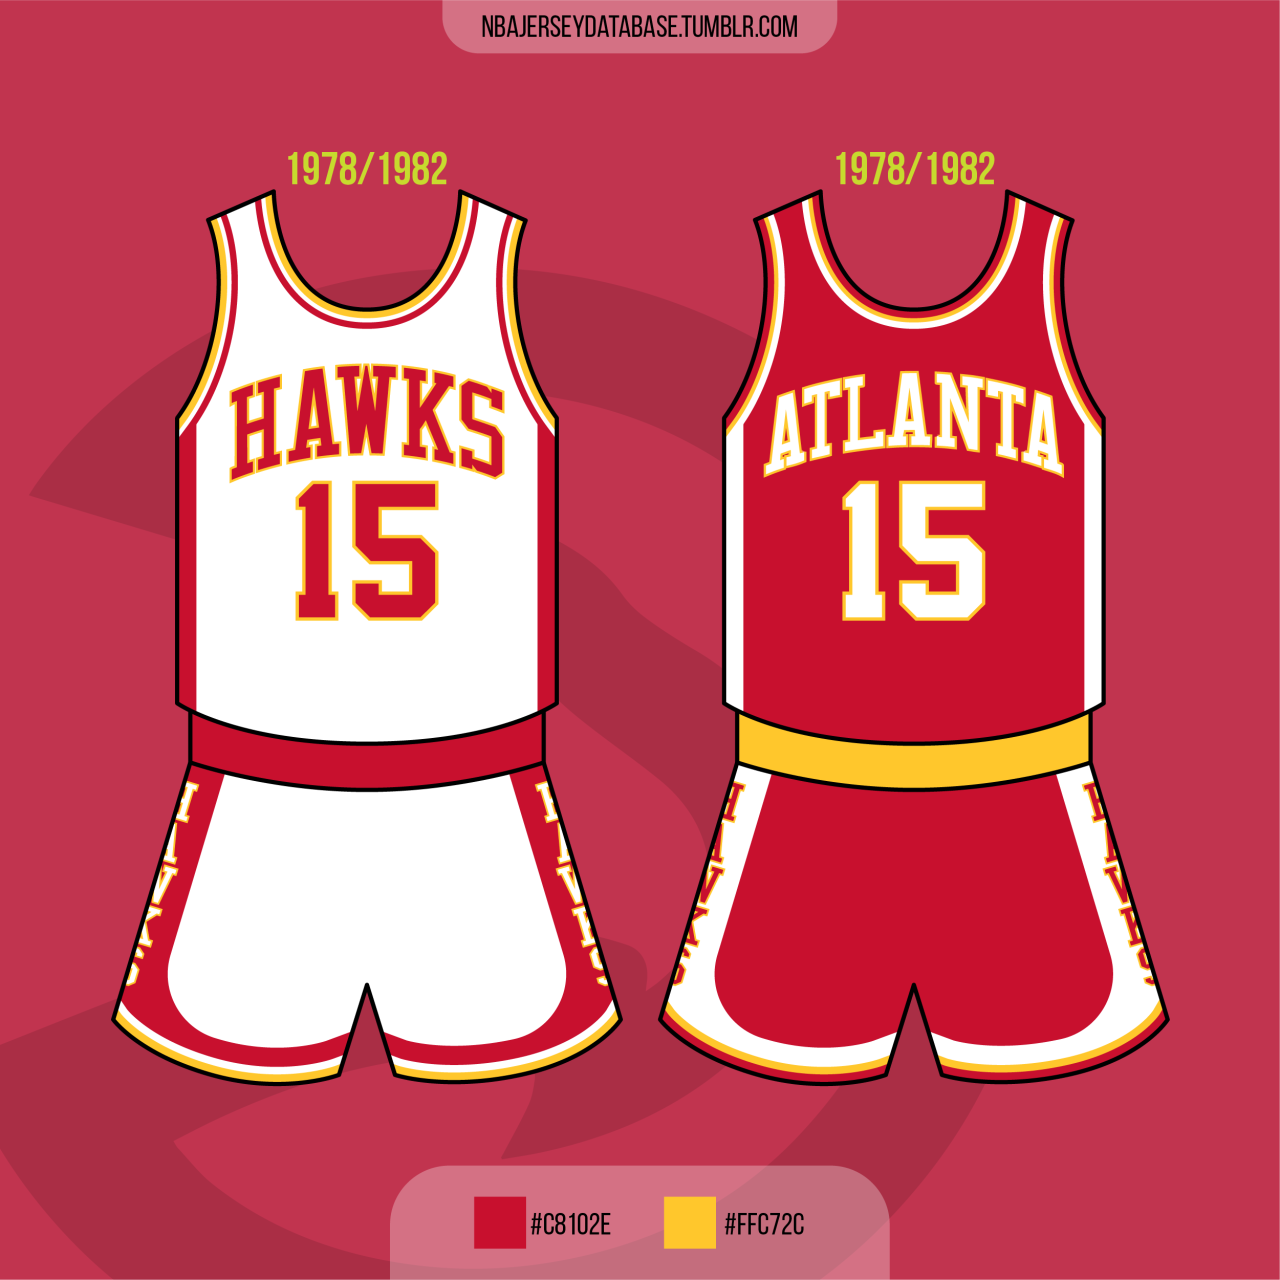 atlanta hawks 1970s jerseys